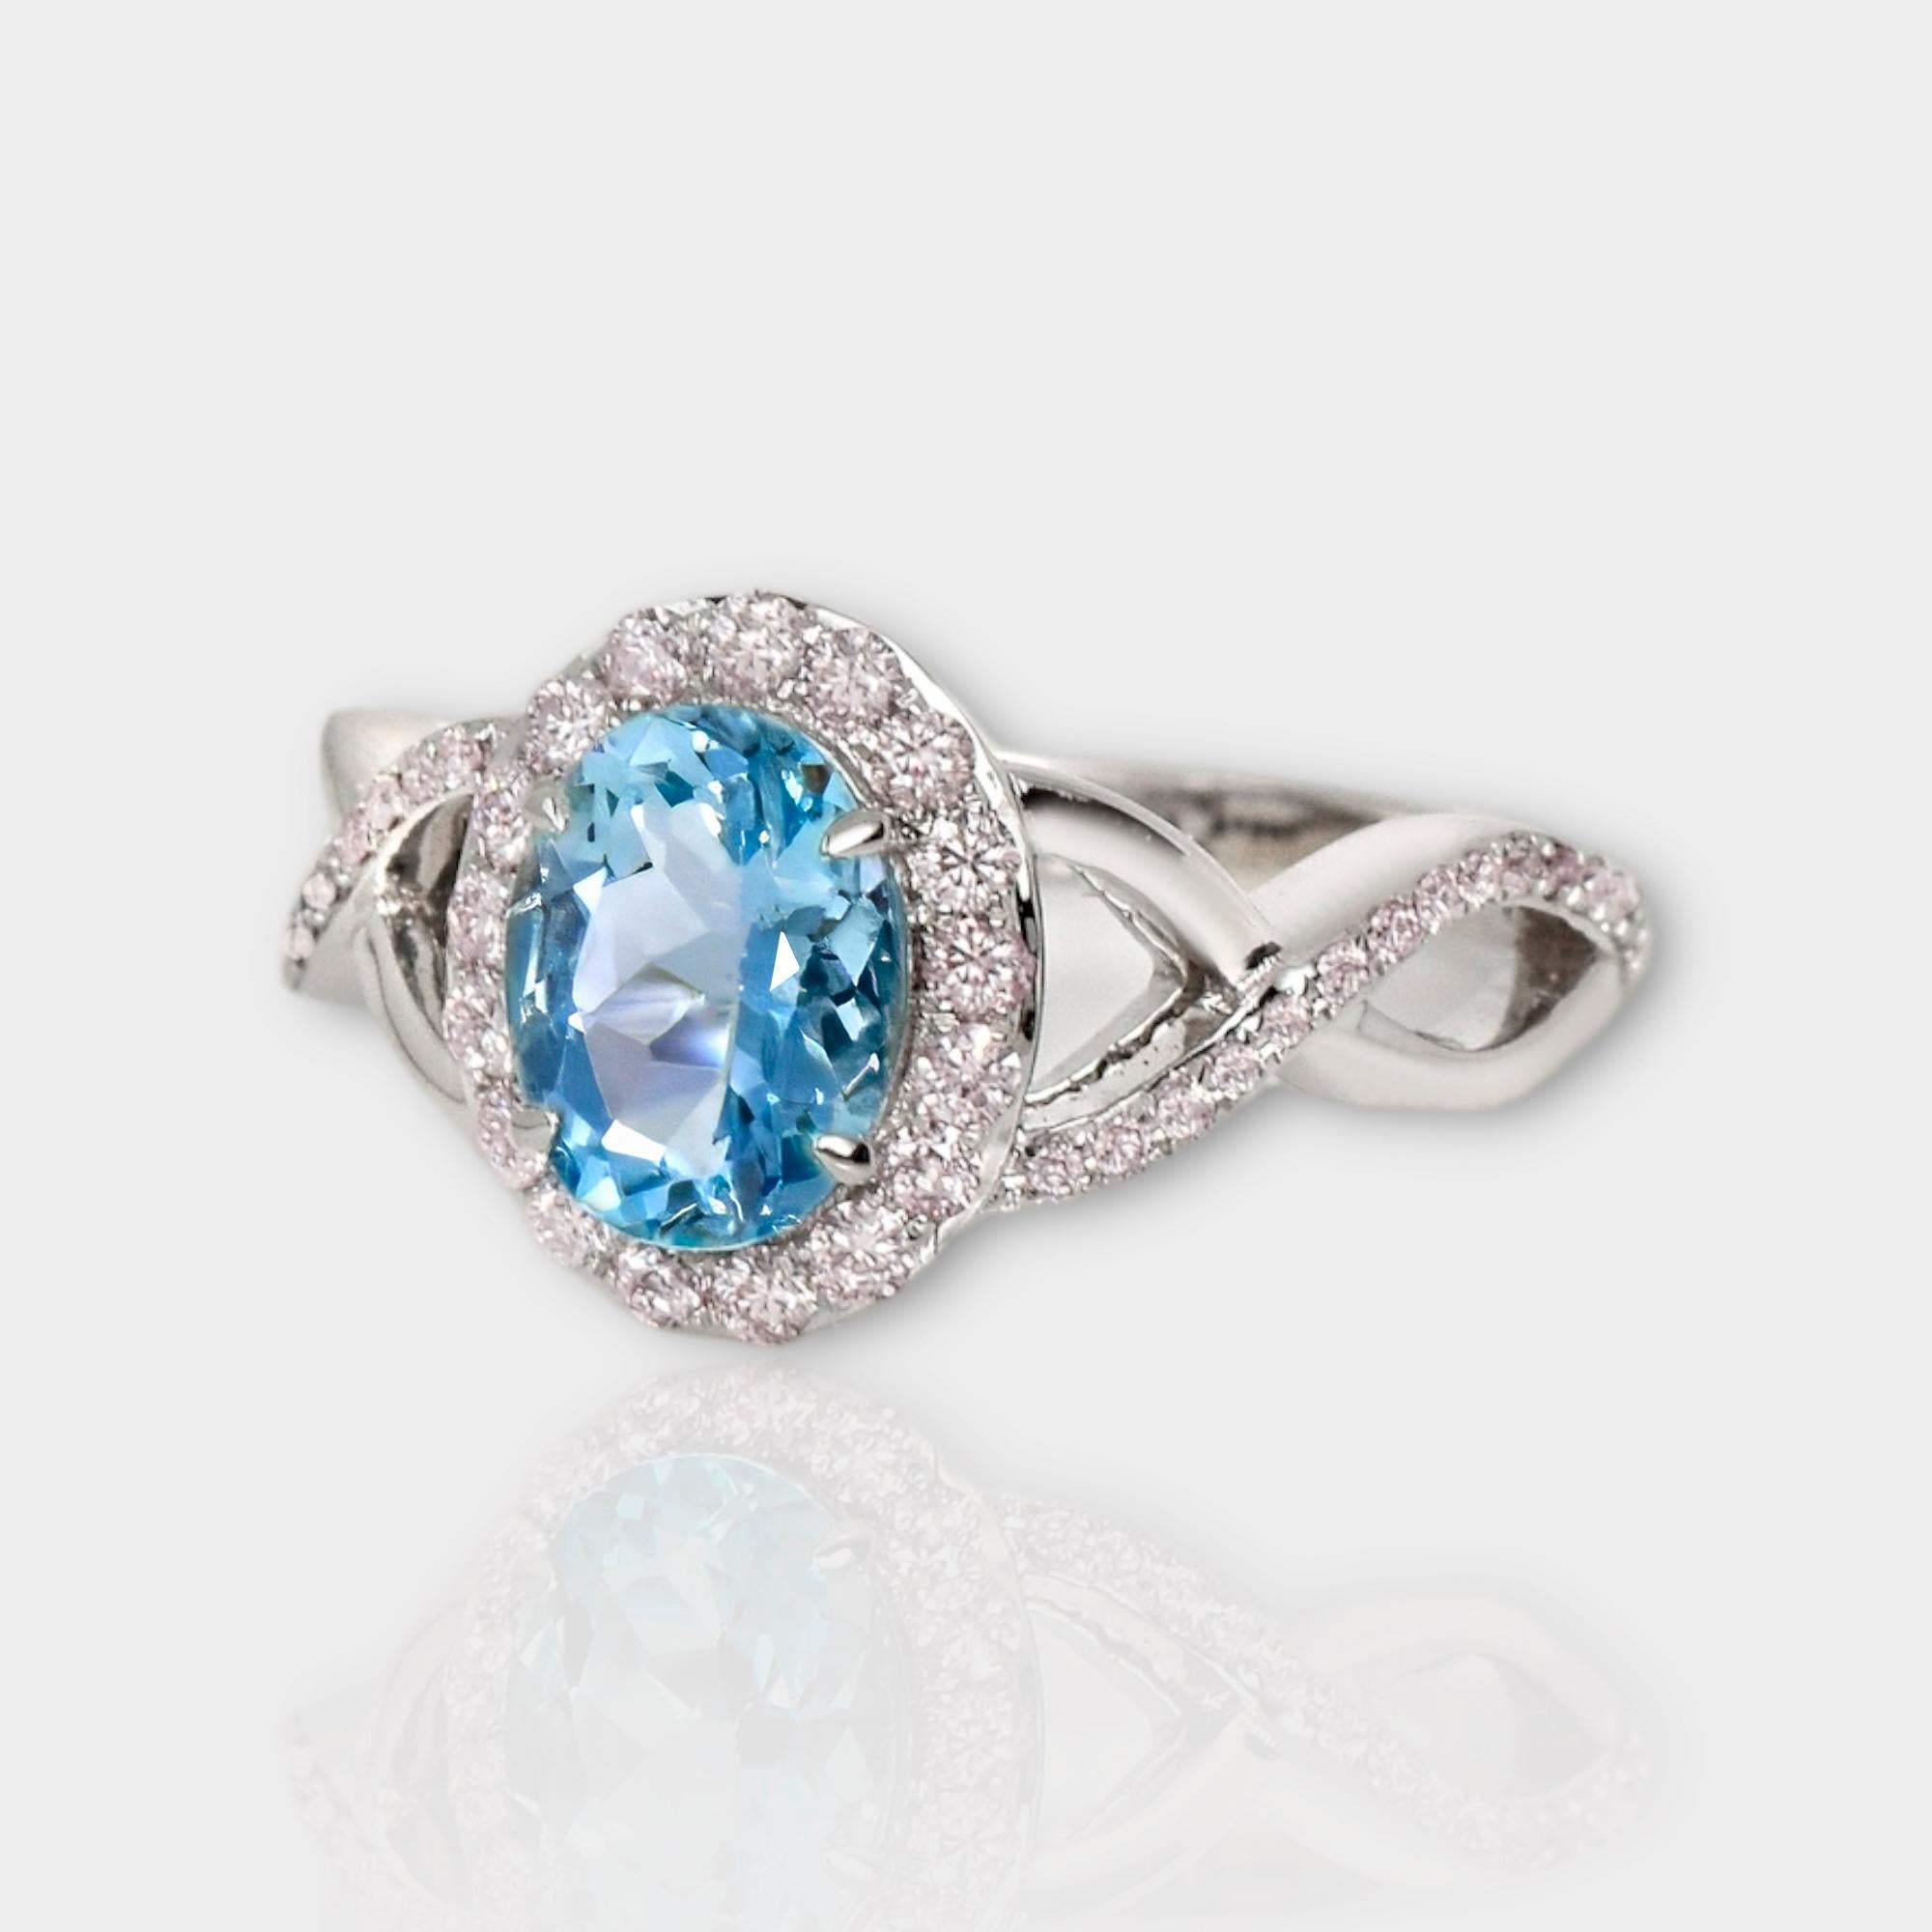 Contemporary IGI 14K 1.14 Ct Aquamarine&Pink Diamonds Antique Art Deco Style Engagement Ring For Sale